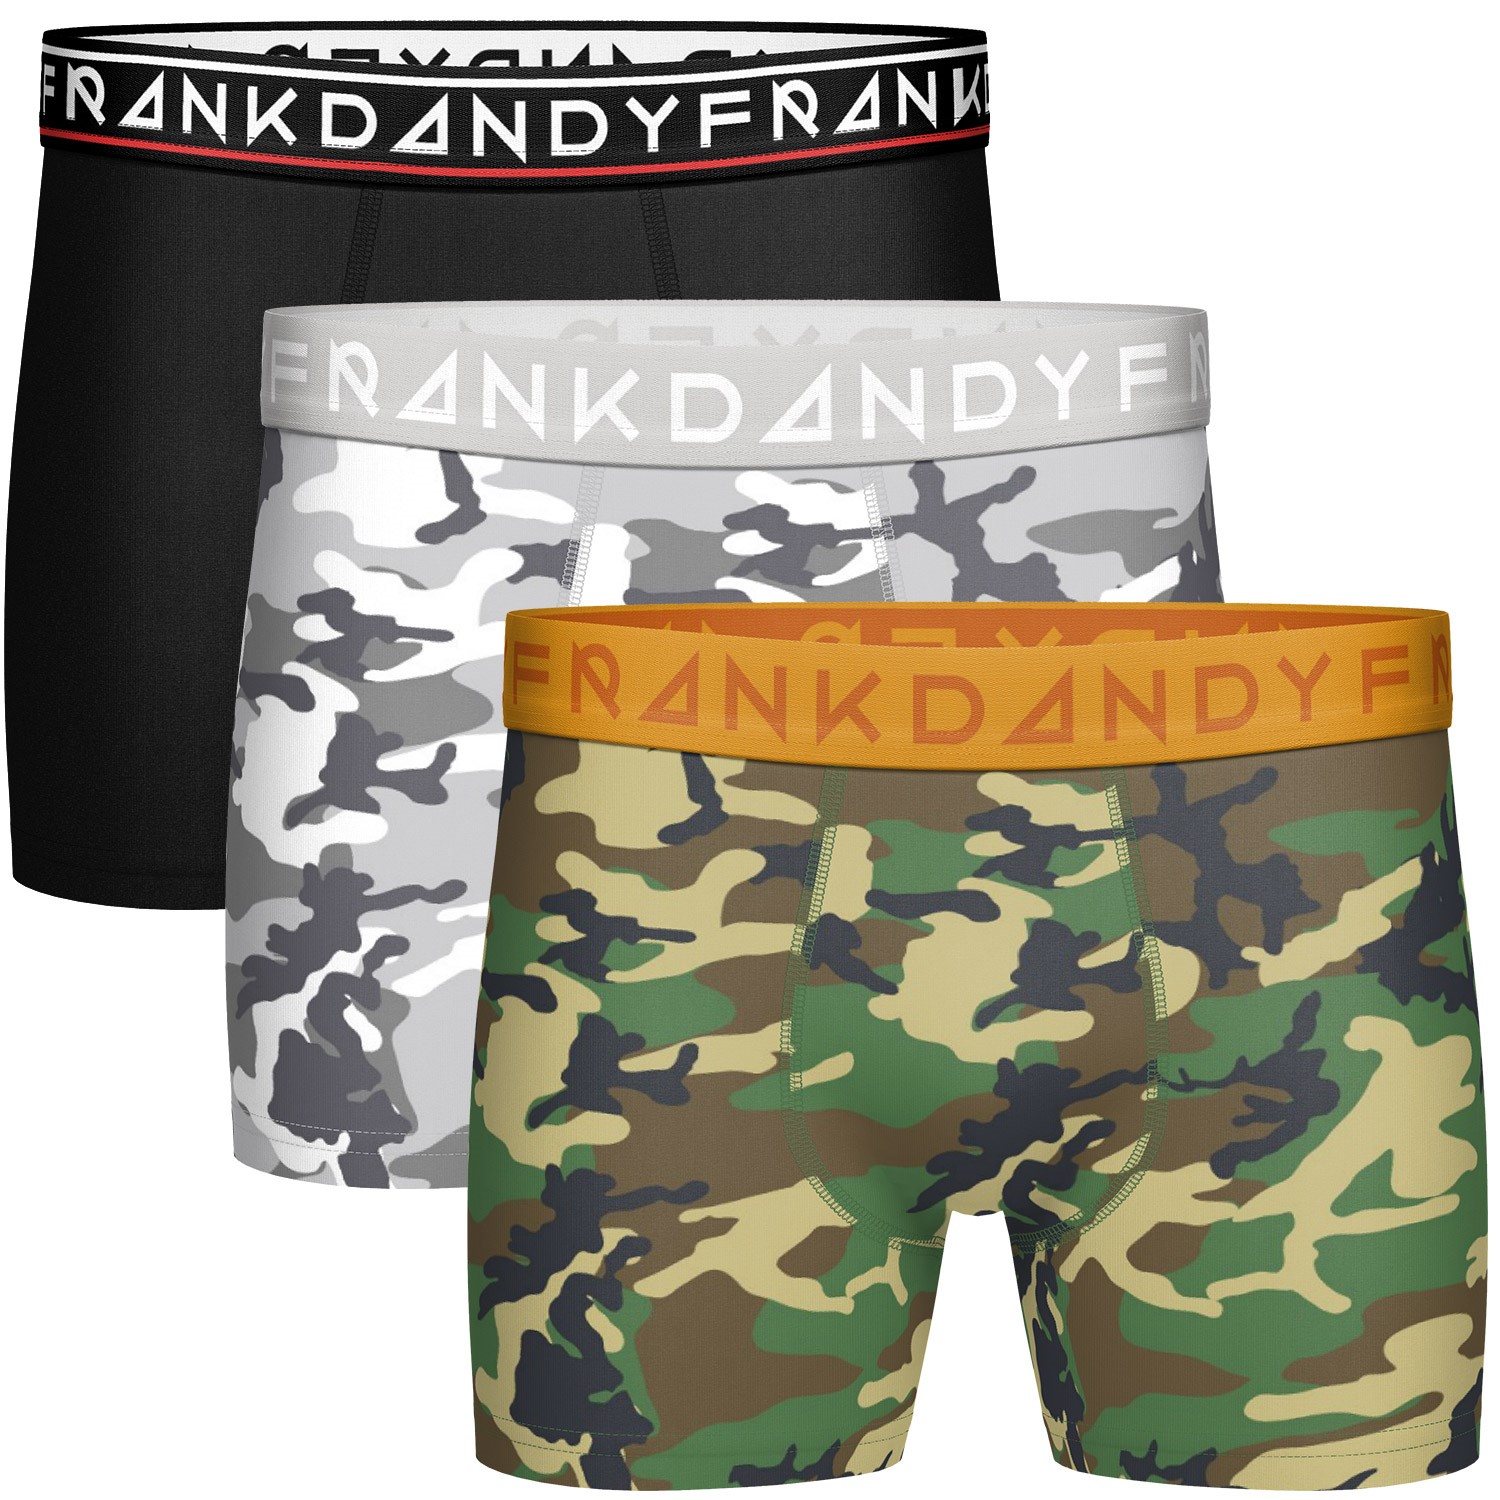 Frank Dandy Camo Boxers 12878